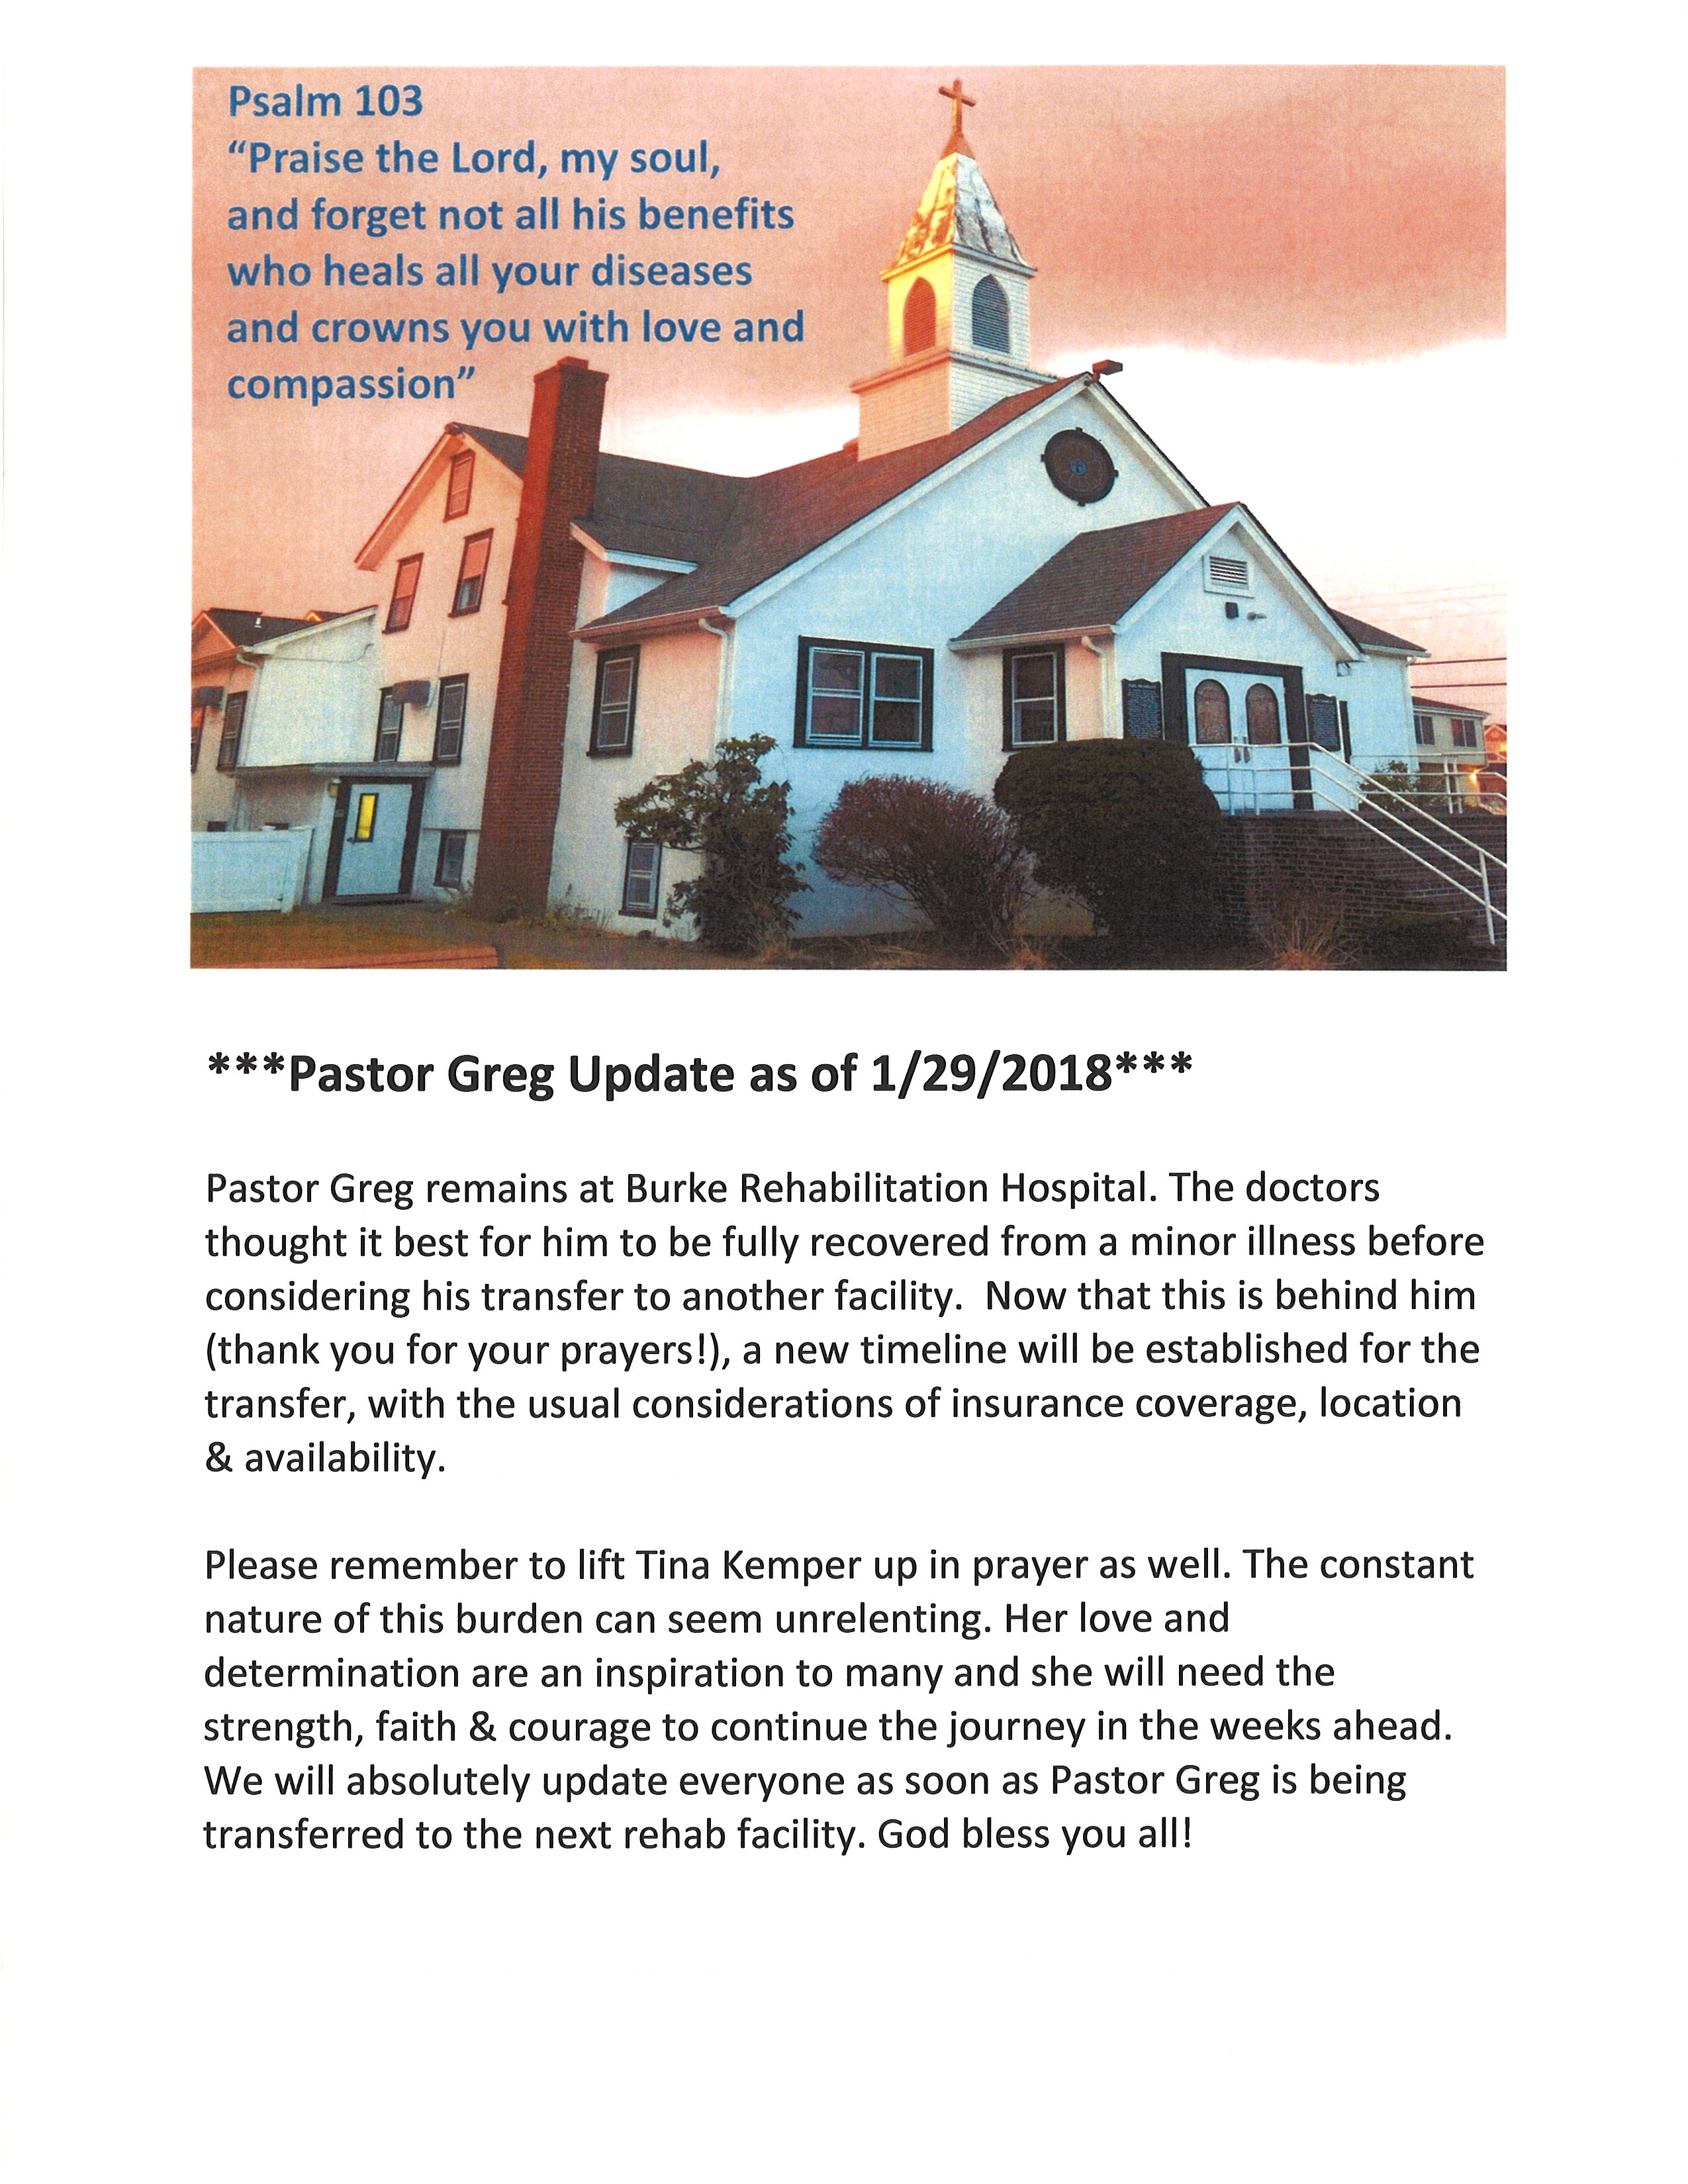 Pastor Greg's Update as of Jan 29, 2018